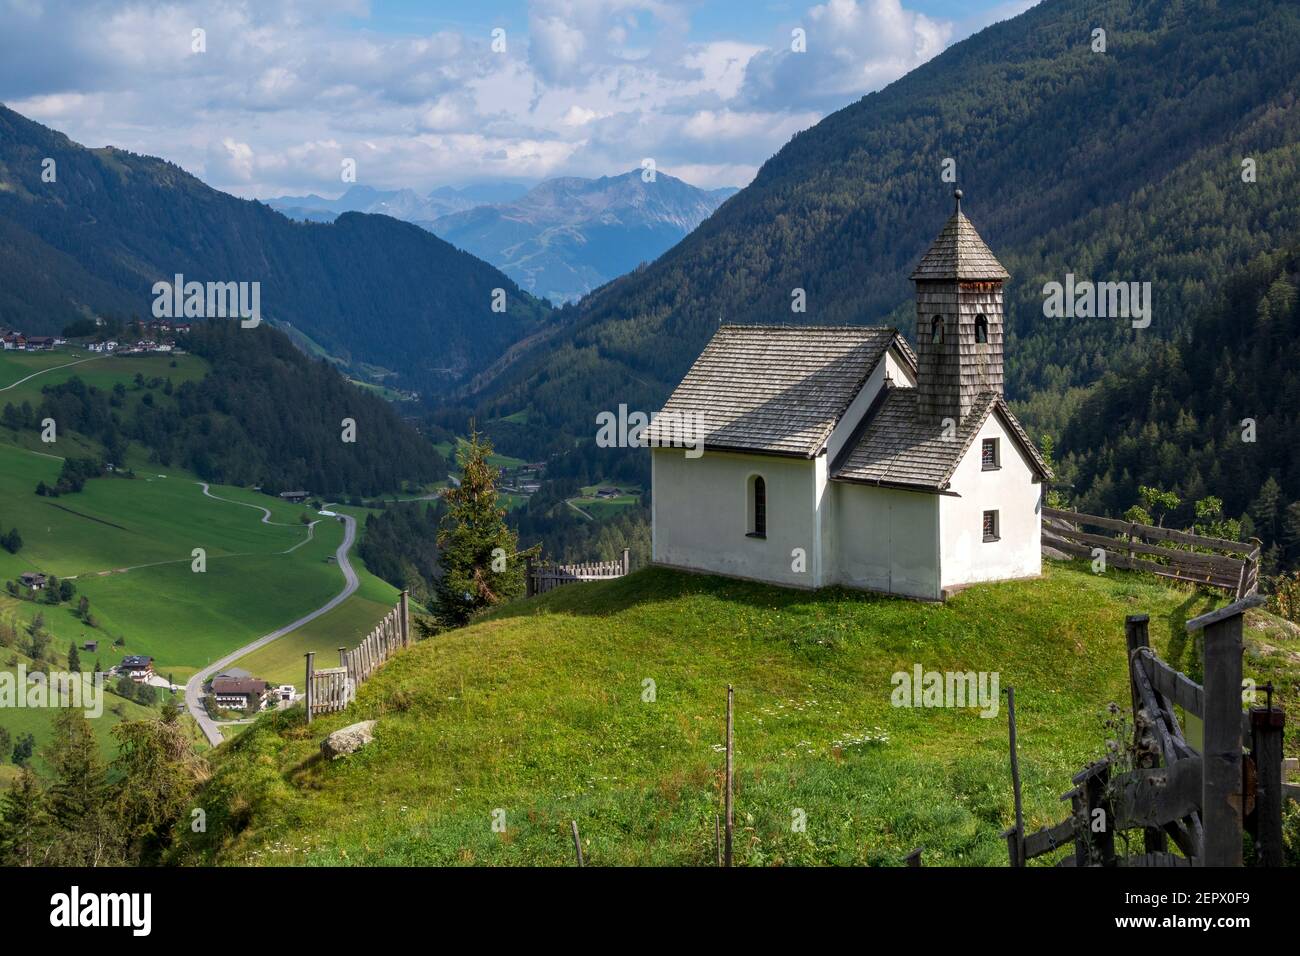 Chapel on hill. Hinterbichl, Prägraten am Großvenediger, Lienz, Austria, Europe. Stock Photo